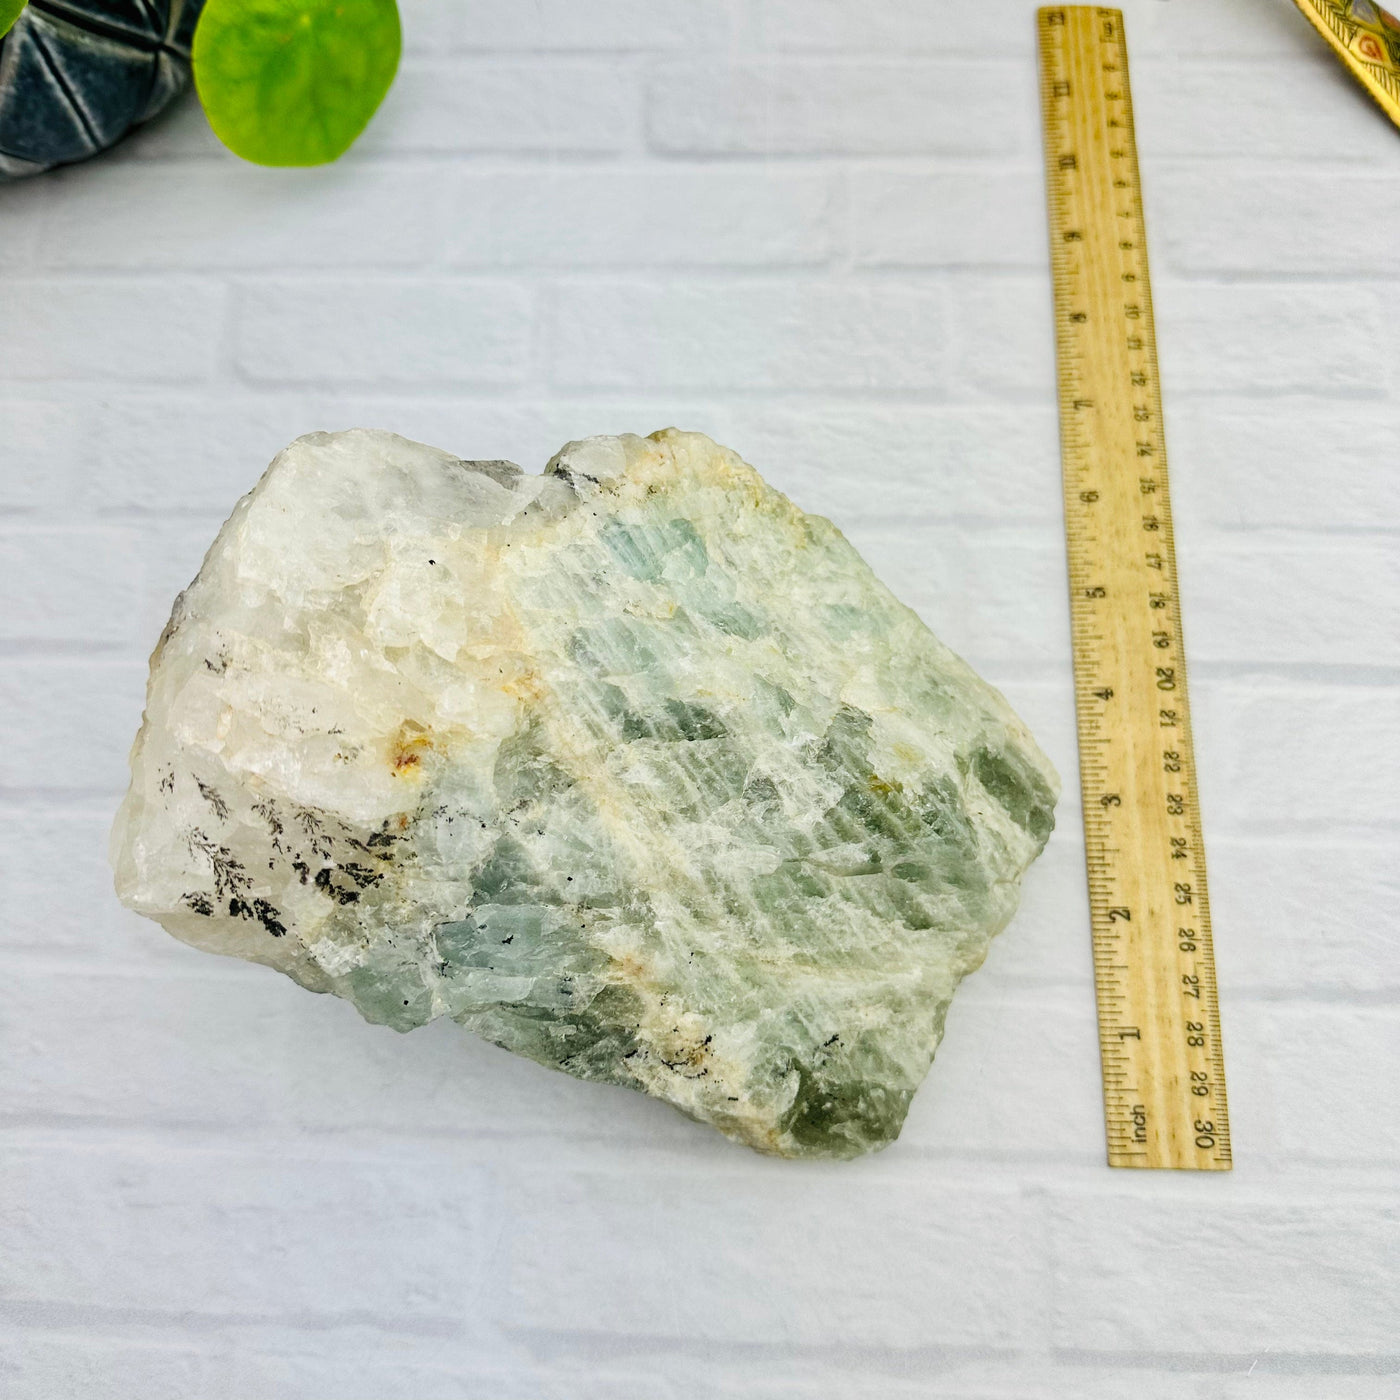 Aquamarine large rough stone - next to ruler for size refence 